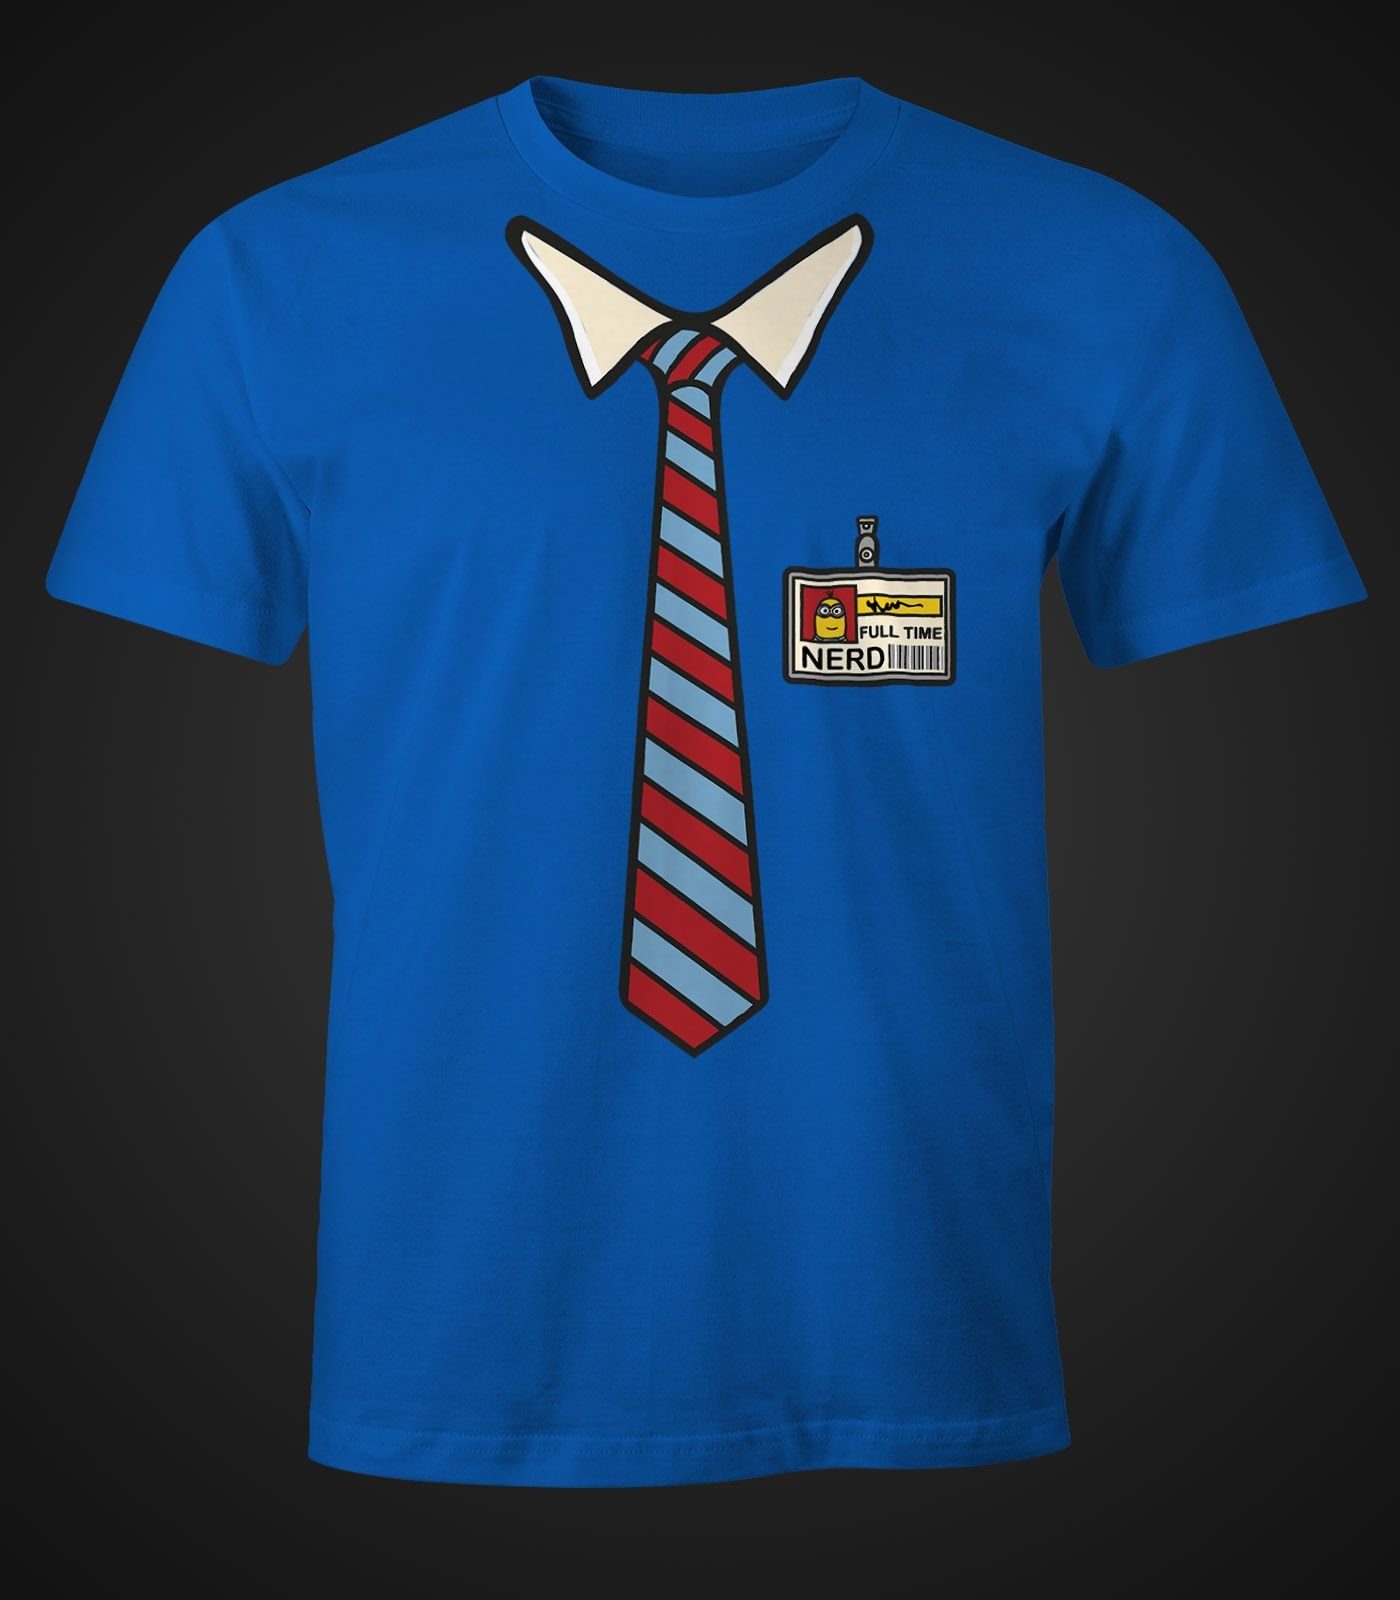 Full Geek blau Print Moonworks® Fun-Shirt Time mit T-Shirt Herren Nerd MoonWorks Print-Shirt